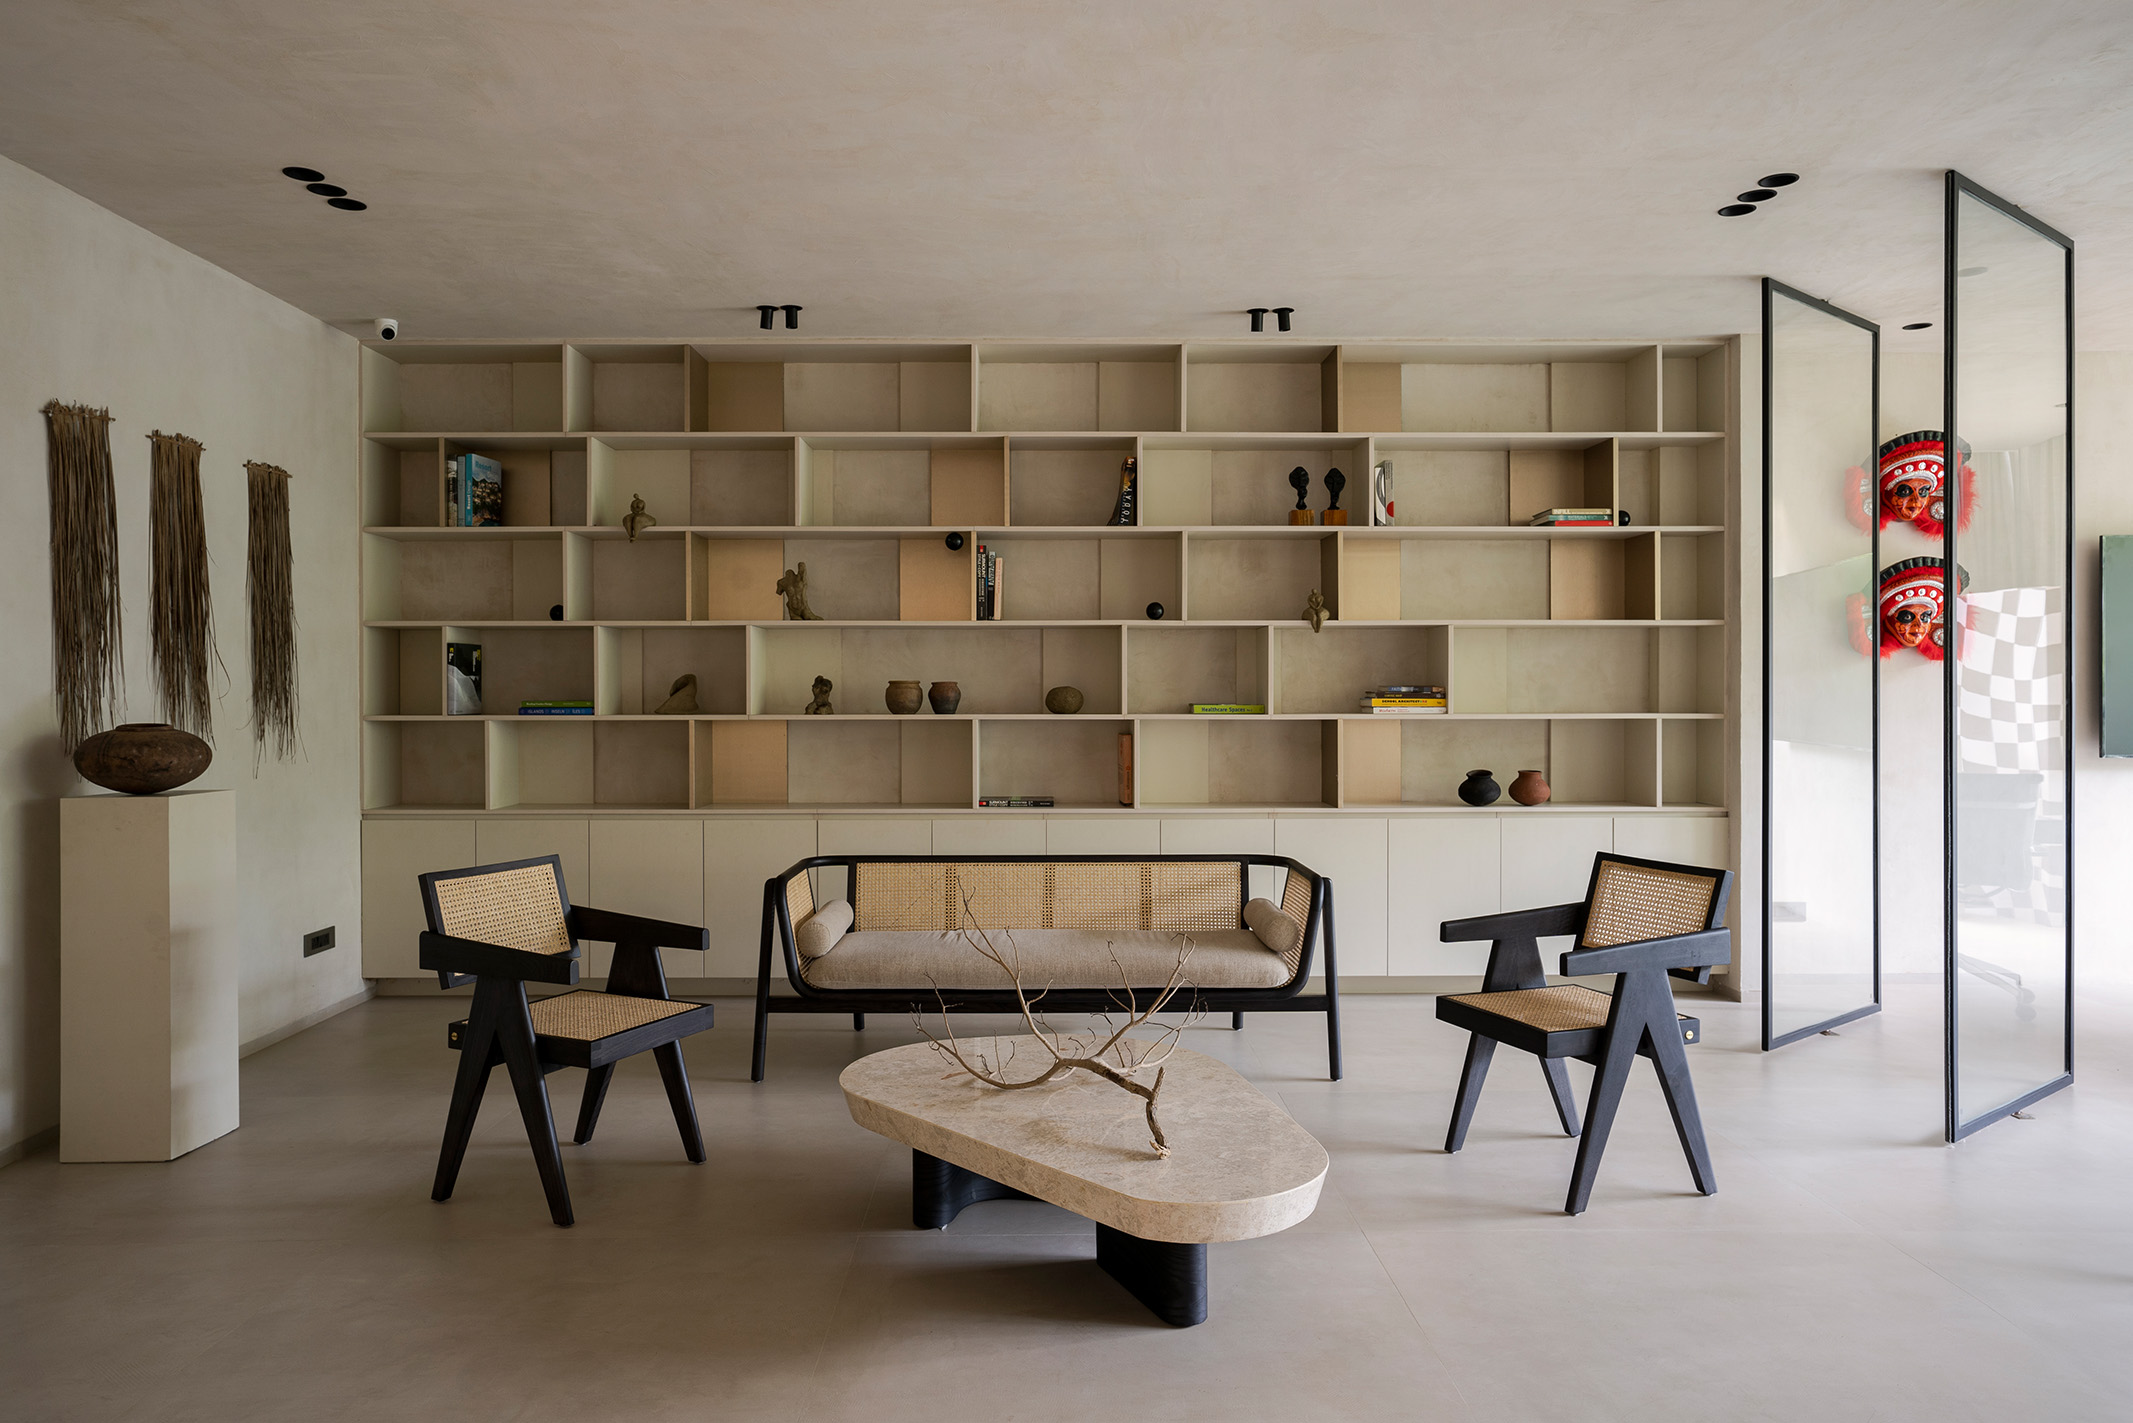 This Kozhikode Office Exemplifies The Rustic Minimalist Aesthetic - Design Pataki